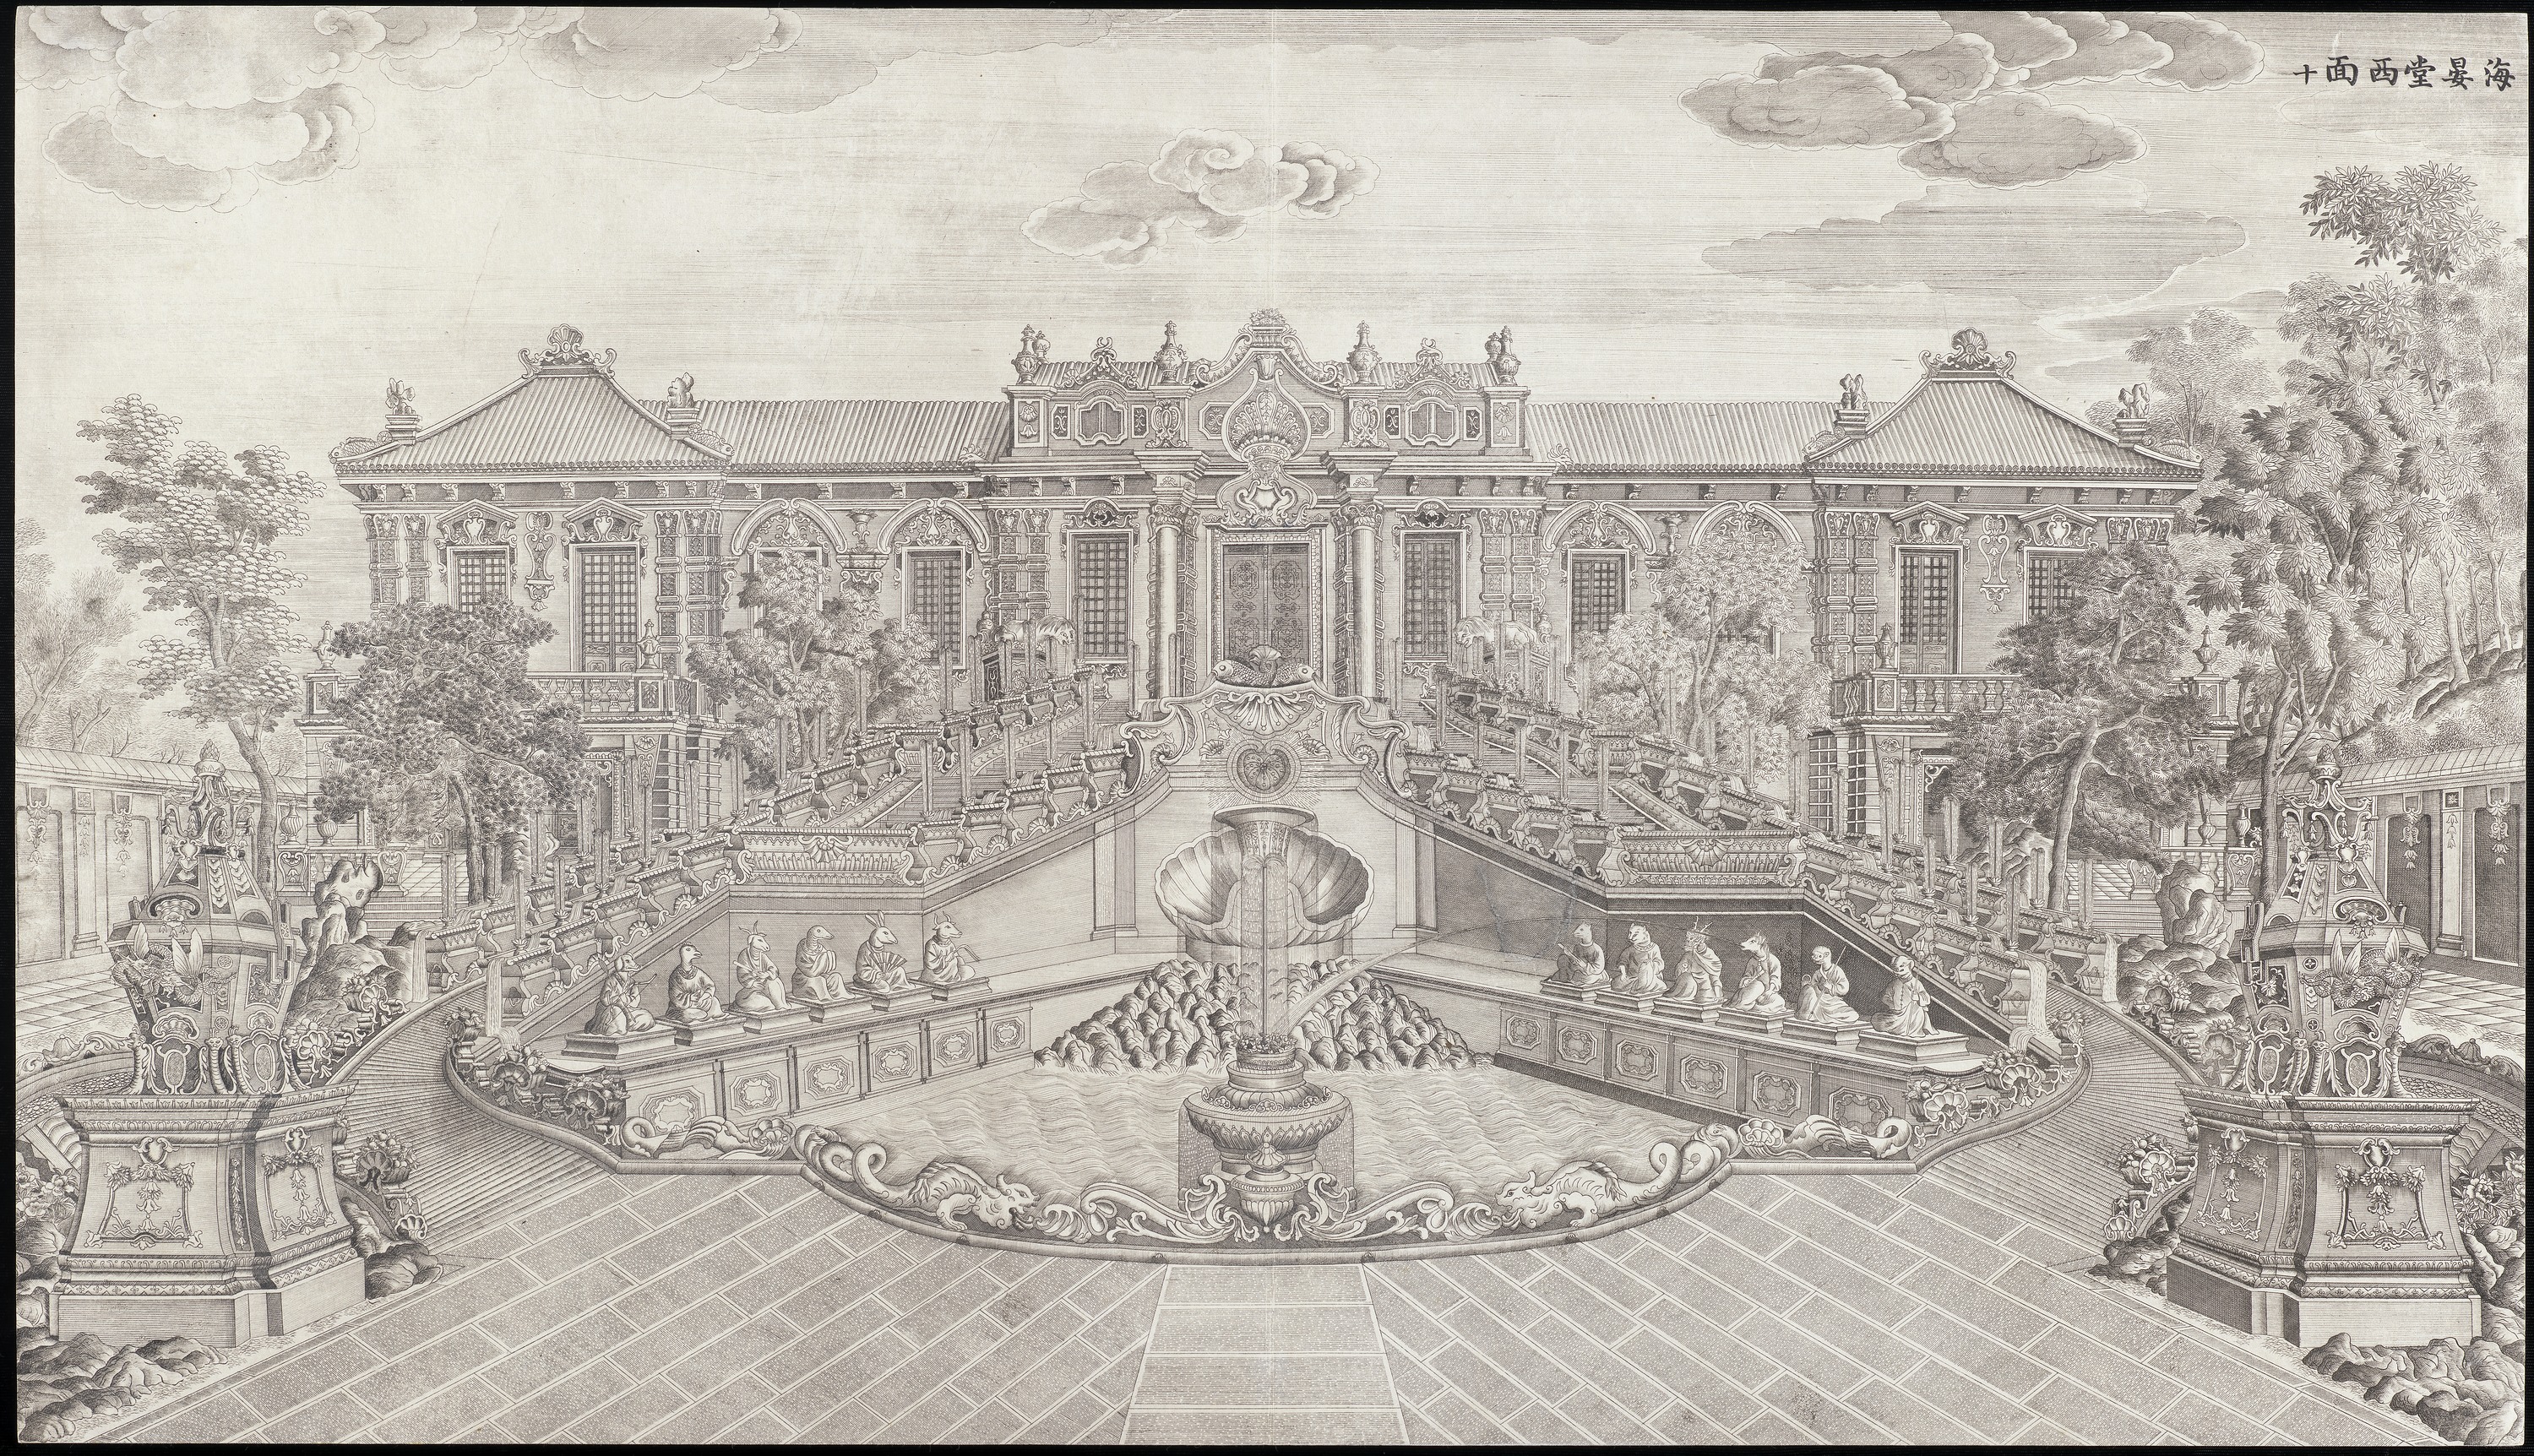 Engraving of palace